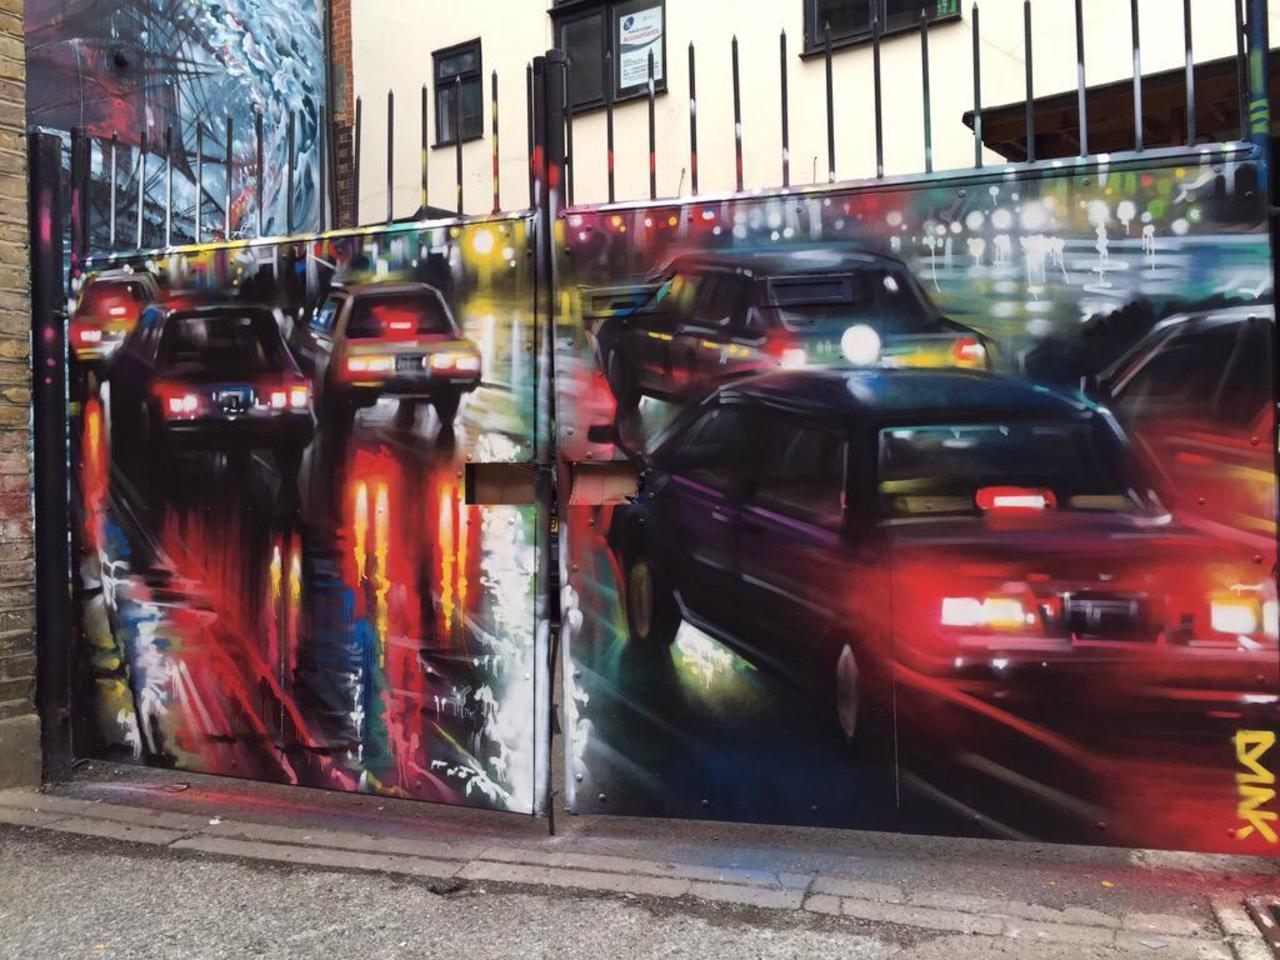 RT belilac "RT belilac "New Street Art by DanKitchener in Brick Lane London 

#art #graffiti #mural #streetart http://t.co/y4tSMrFmpG""